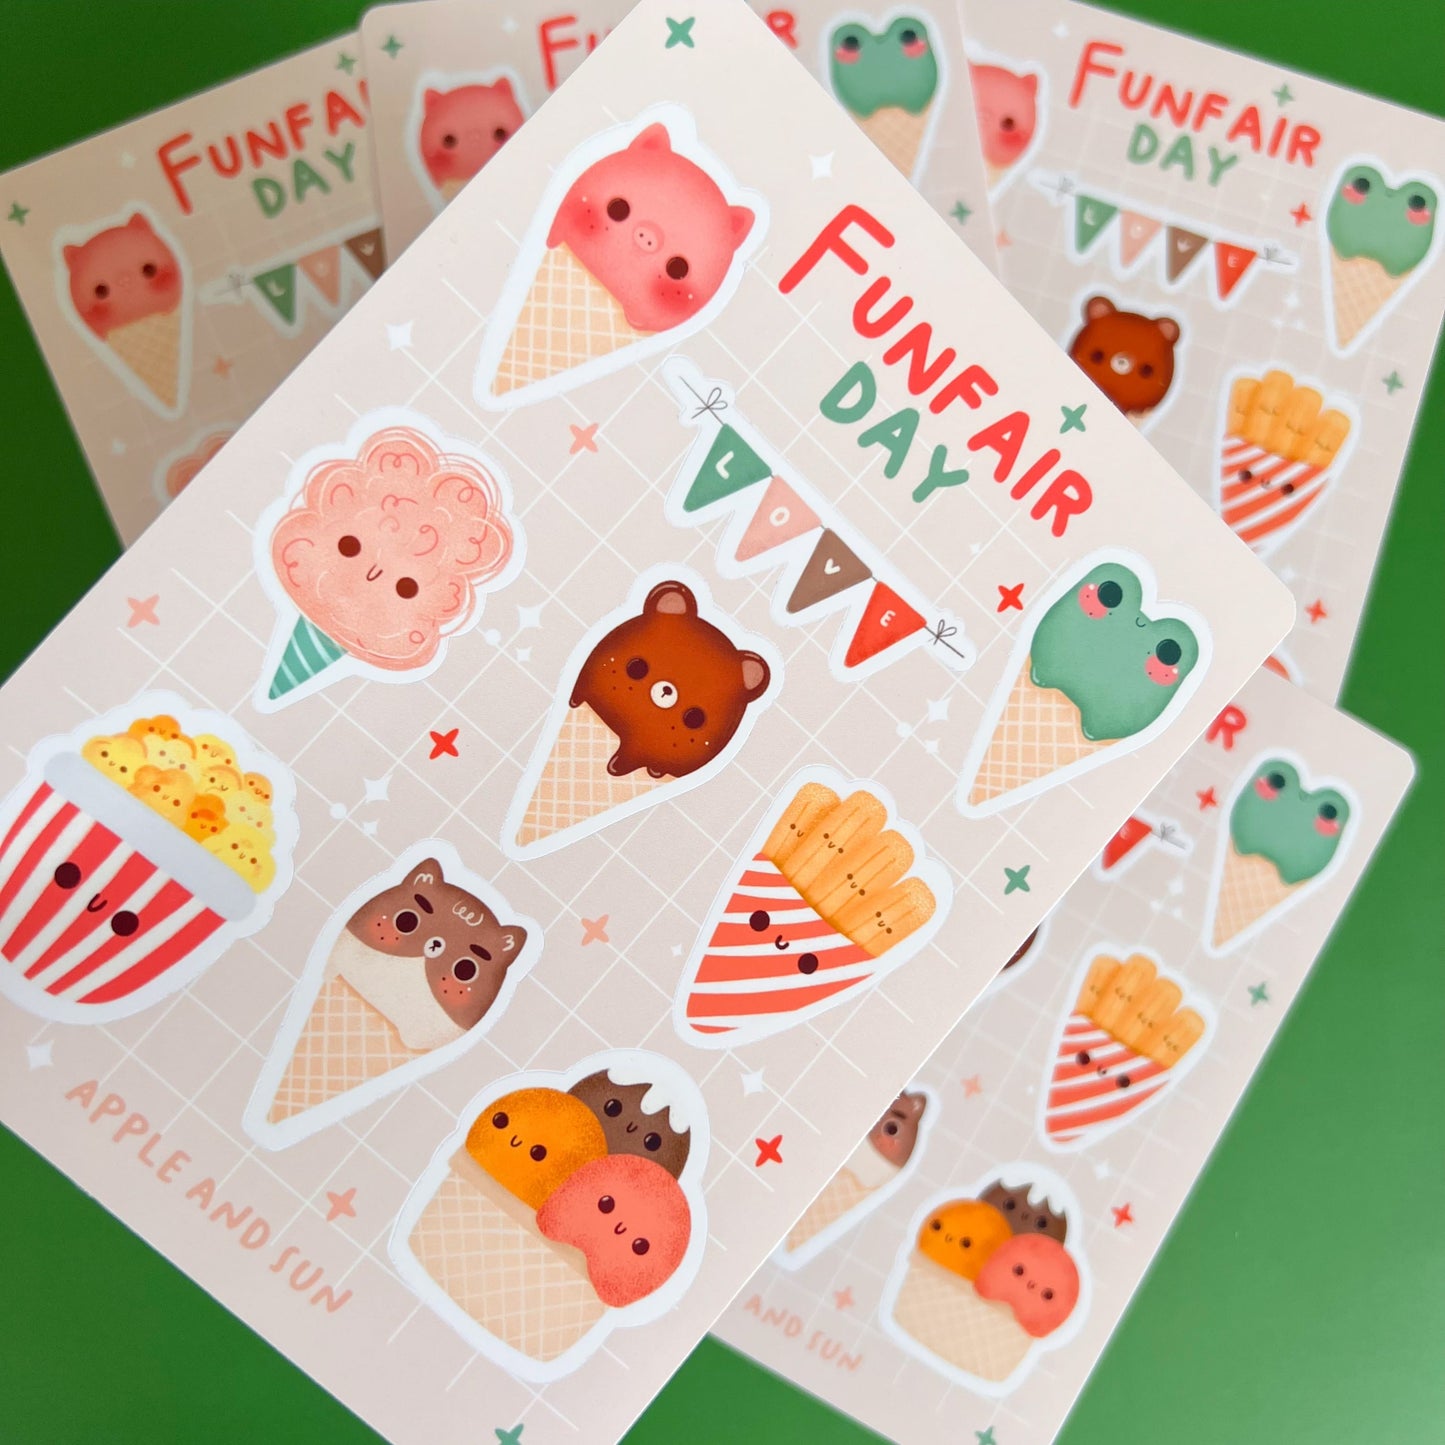 Funfair day Stickers sheet